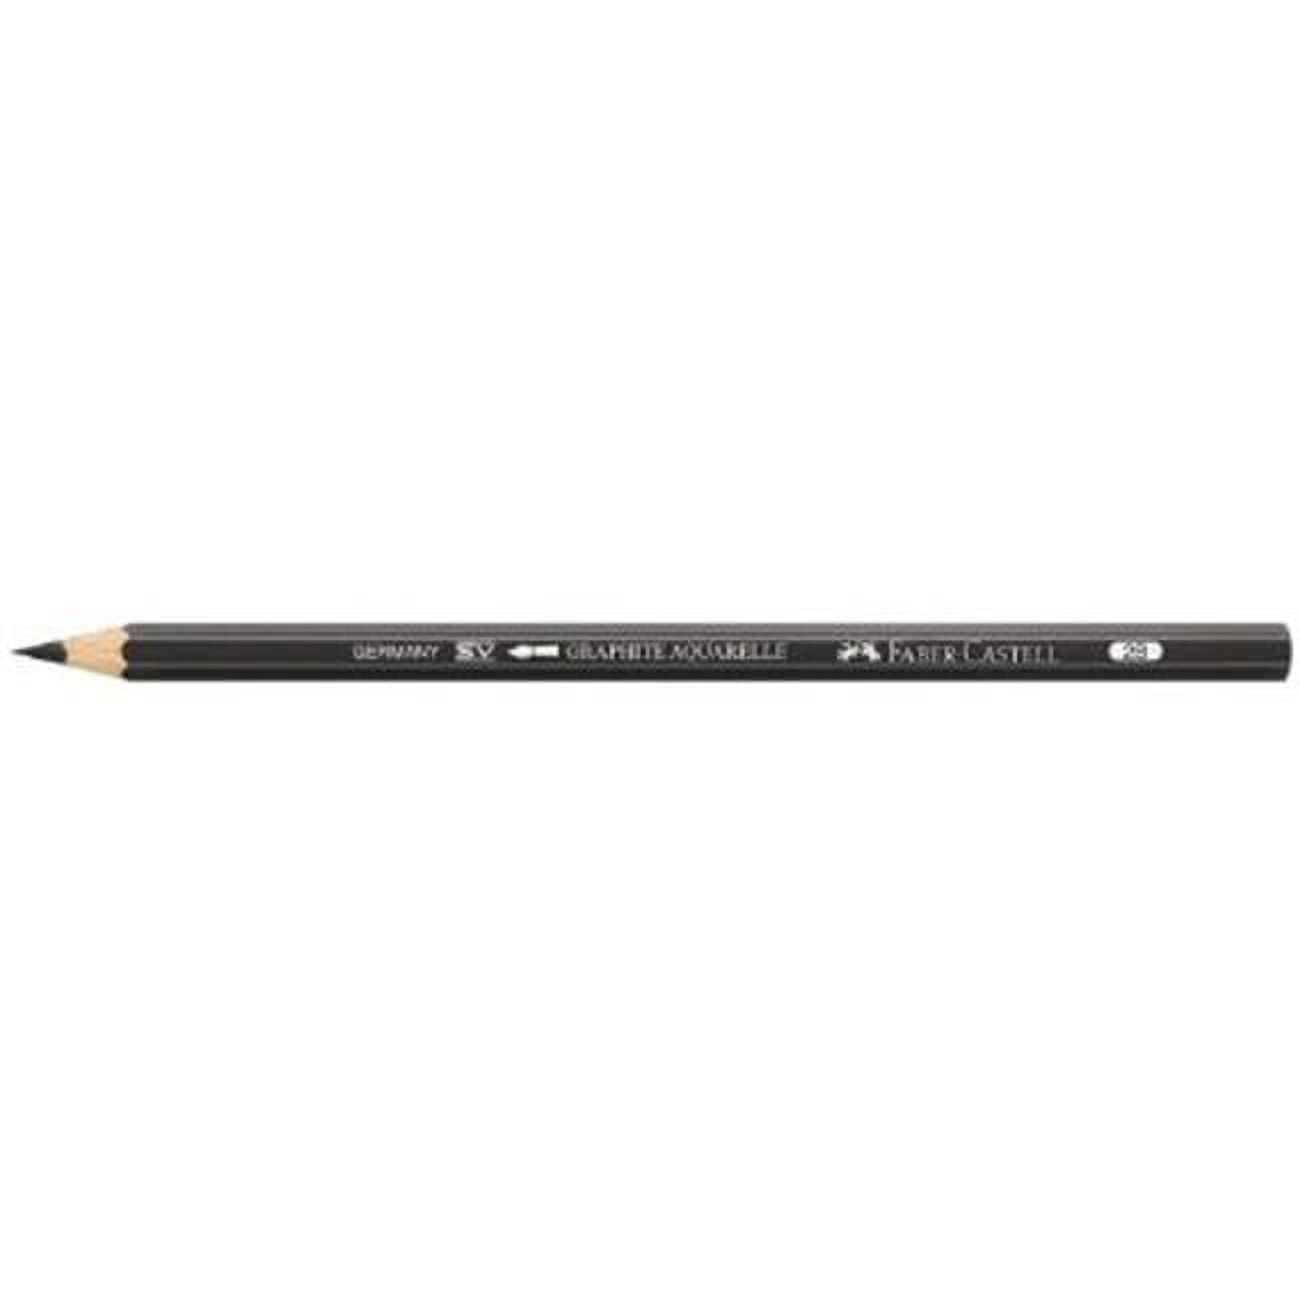 48 Graphite Drawing Sketching Pencils 2B Artist Premium Wood Pencil Un-sharpened